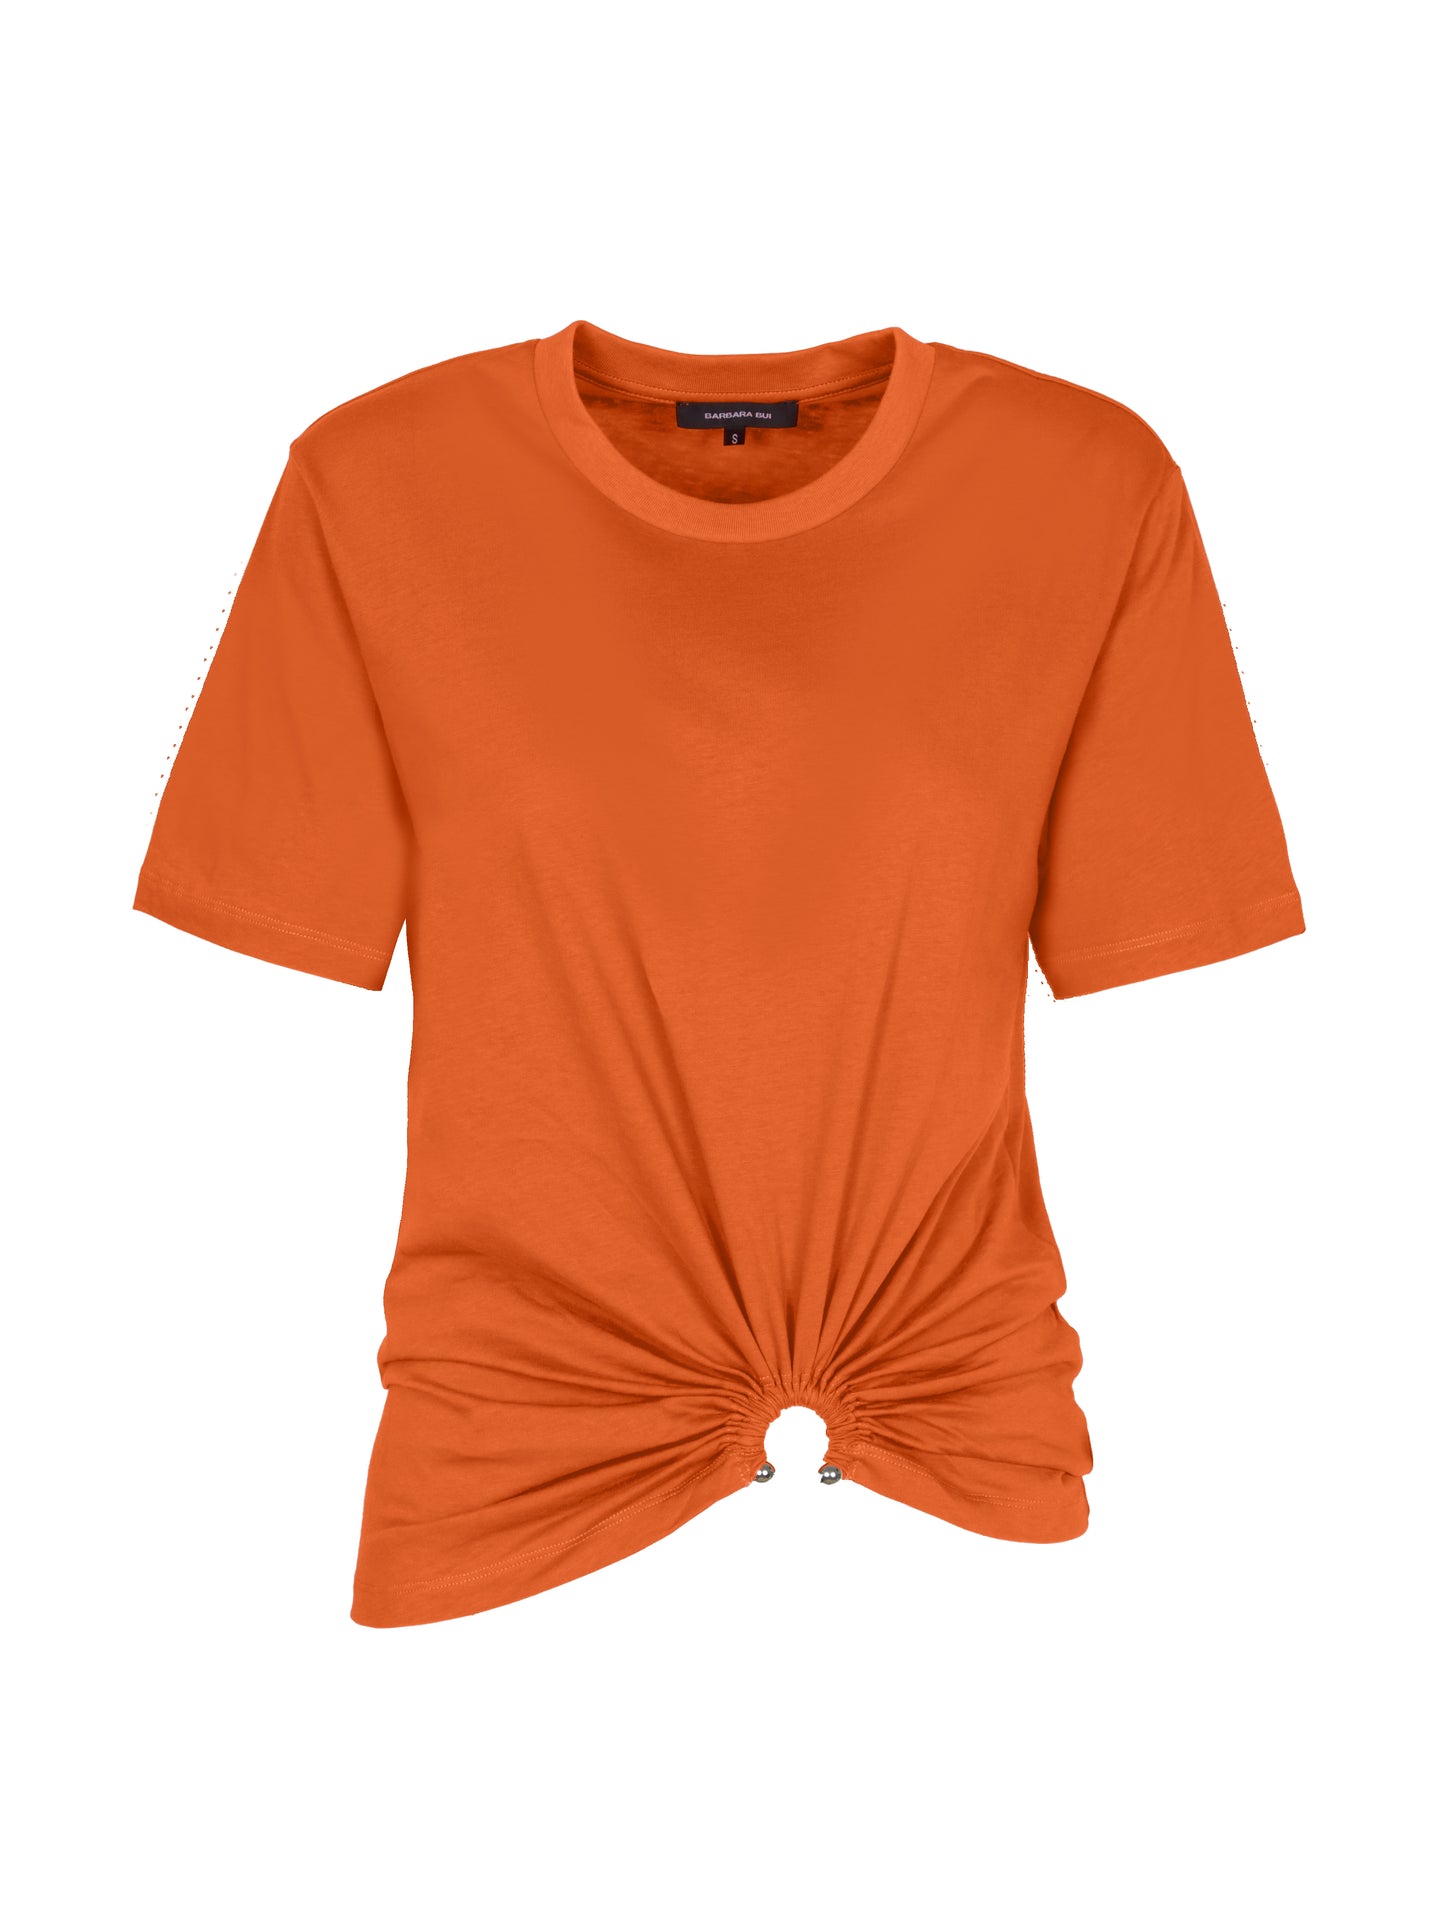 BARBARA BUI T-Shirt in orange